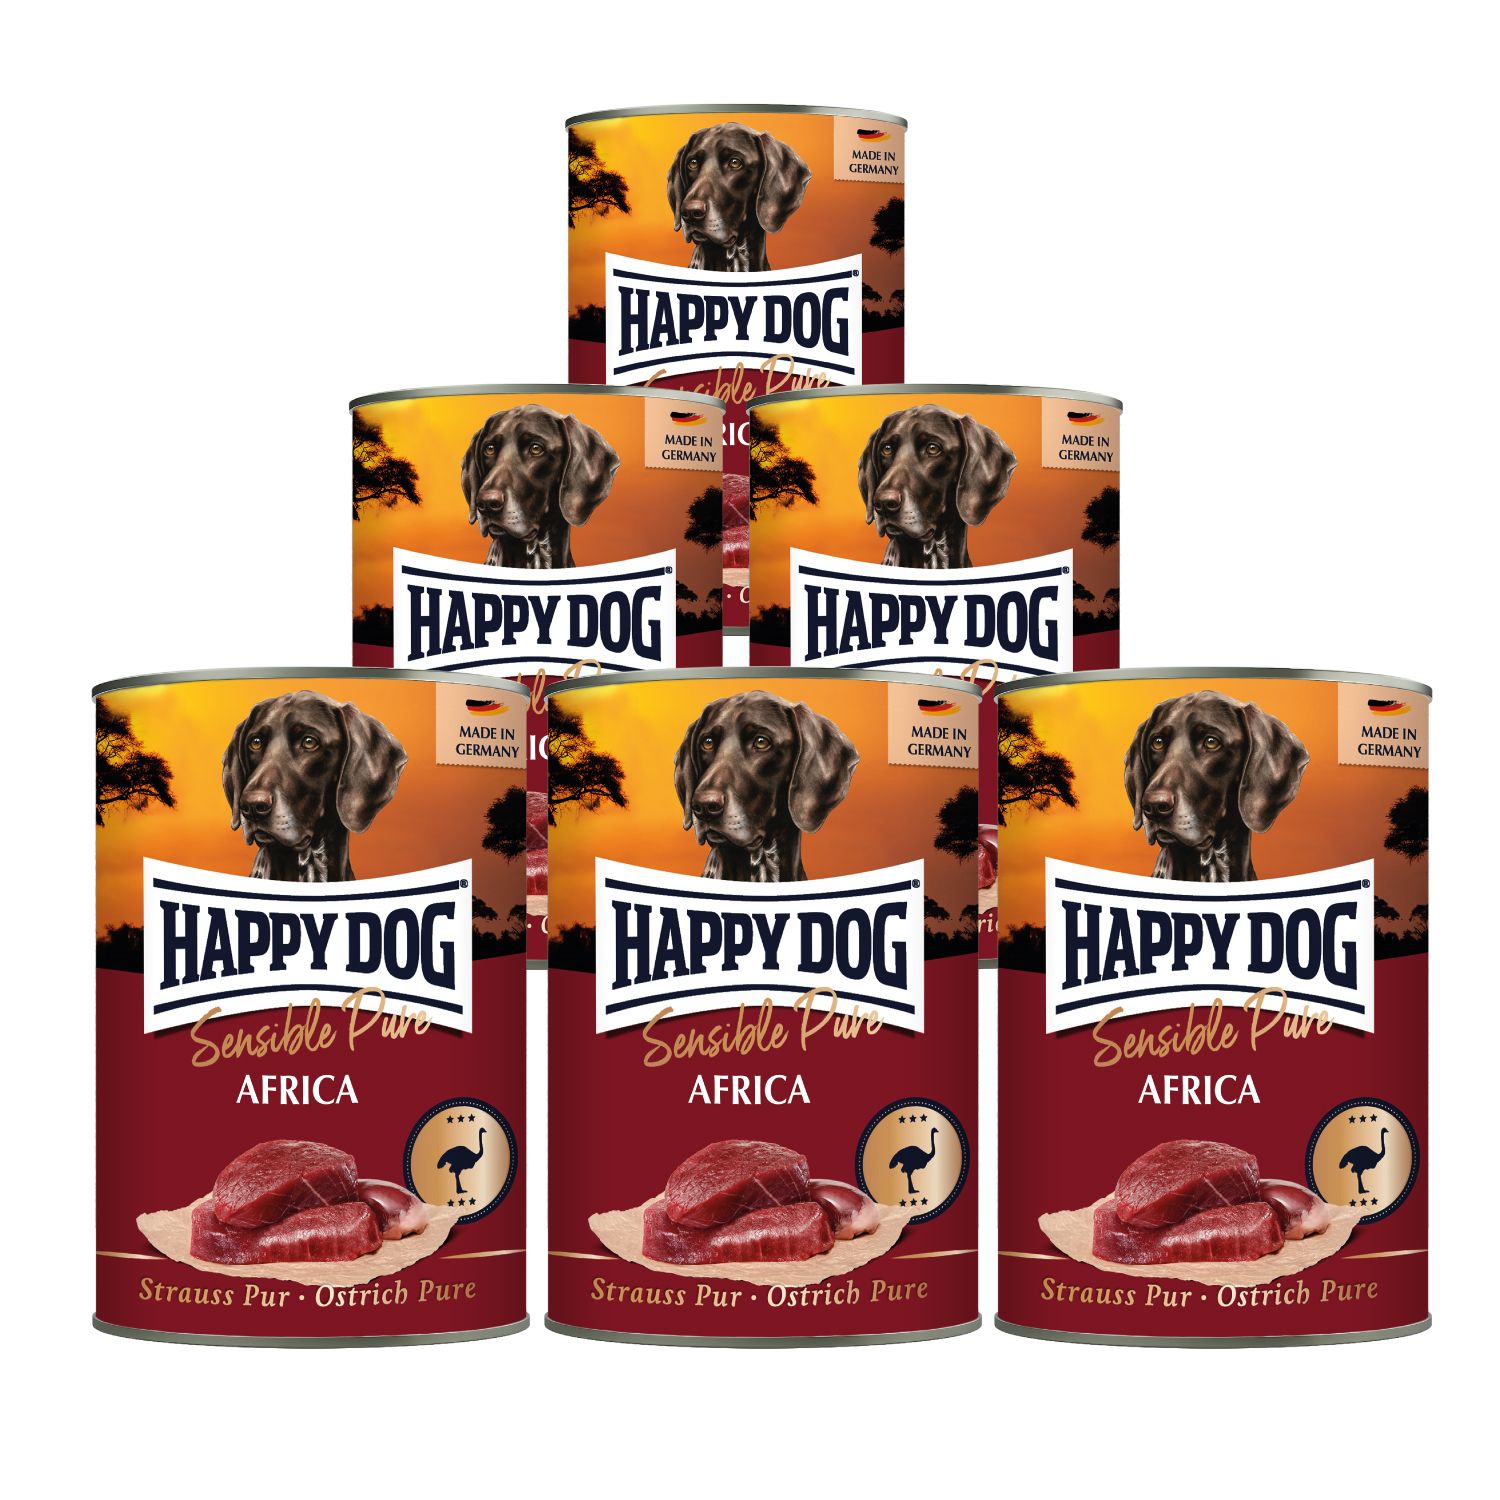 Happy Dog Sensible Pure Africa 400g